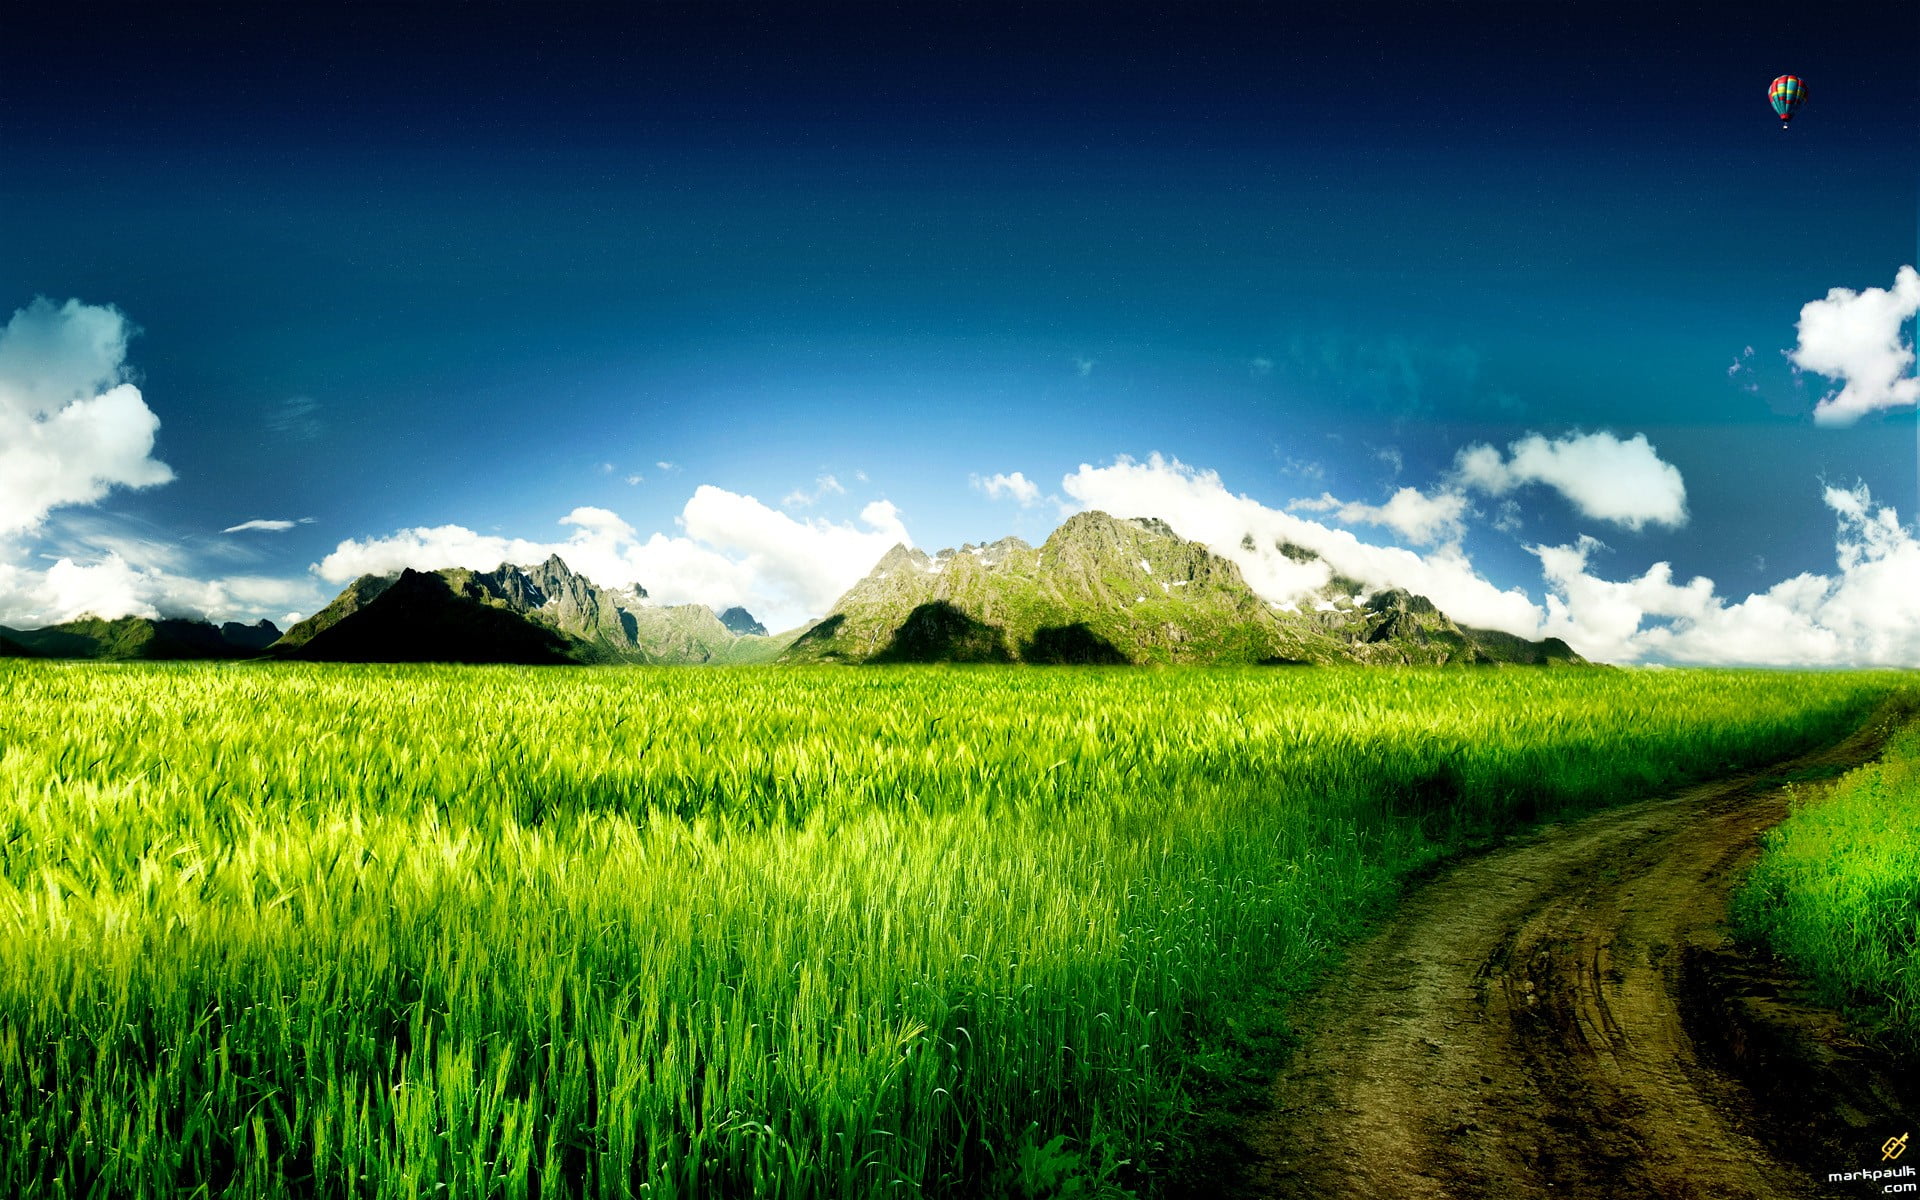 green and white grass field, digital art, landscape, sky, scenics - nature